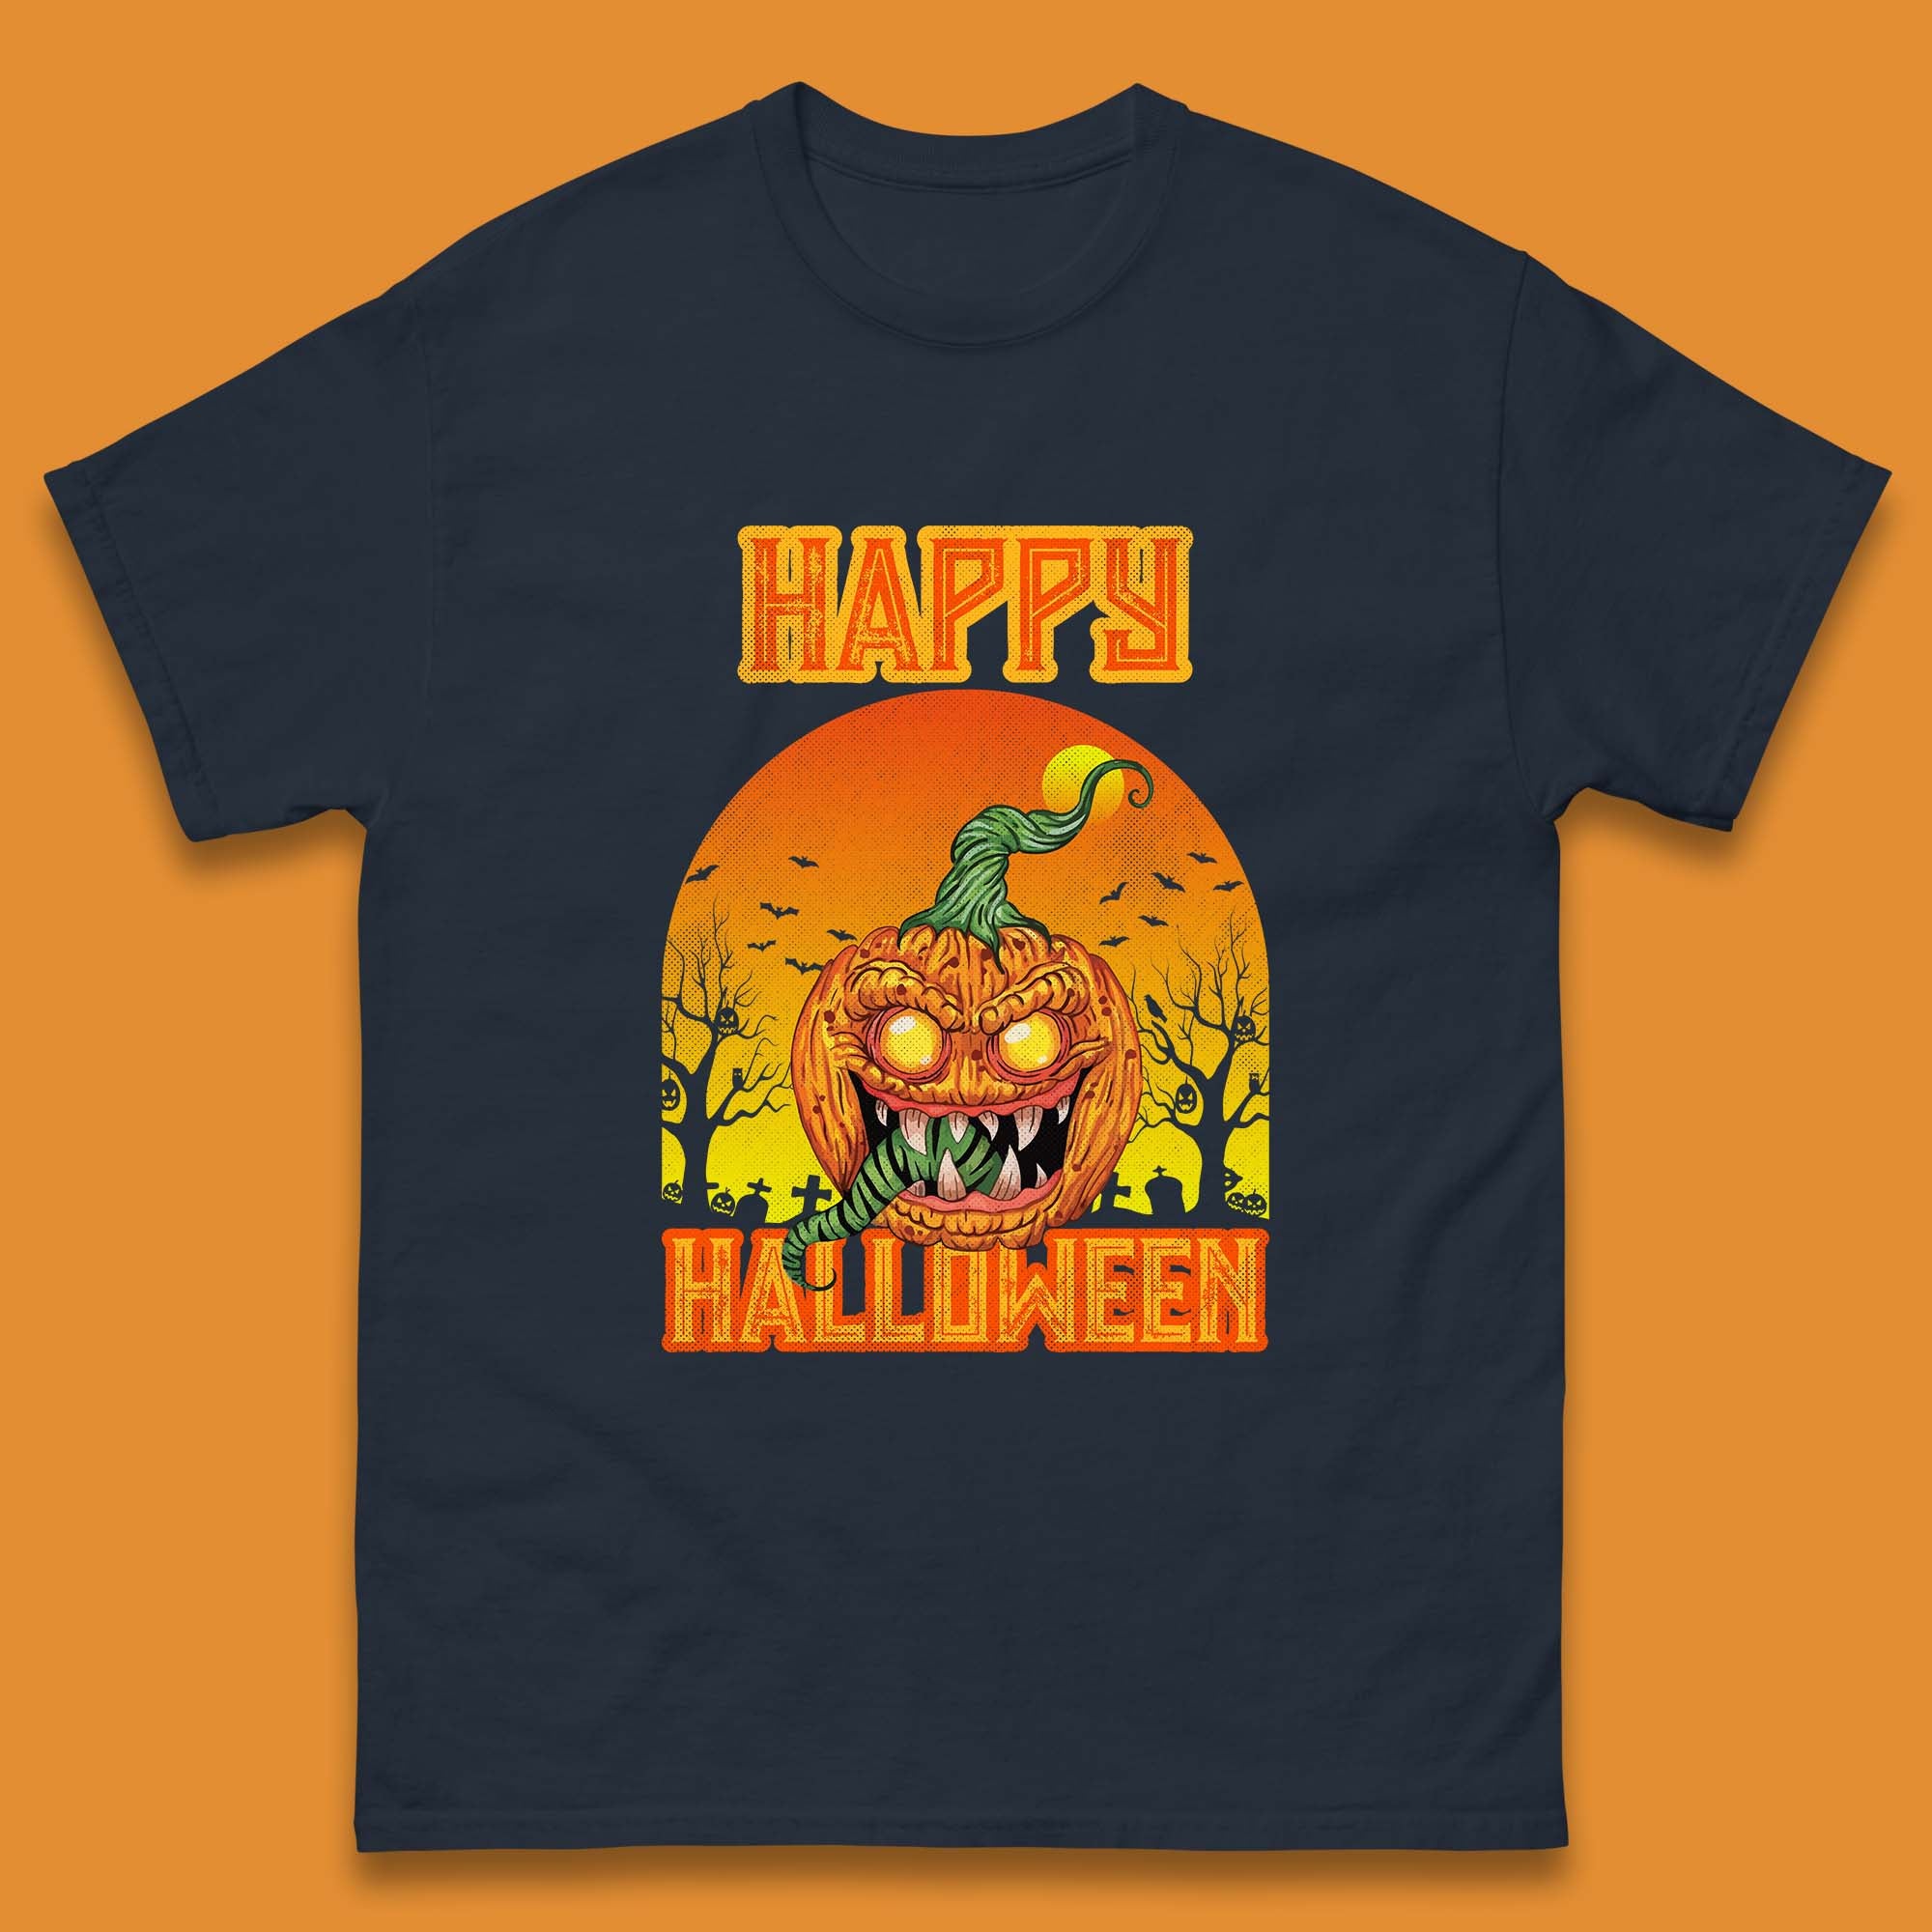 Happy Halloween Zombie Monster Pumpkin Jack-o-lantern Spooky Season Mens Tee Top